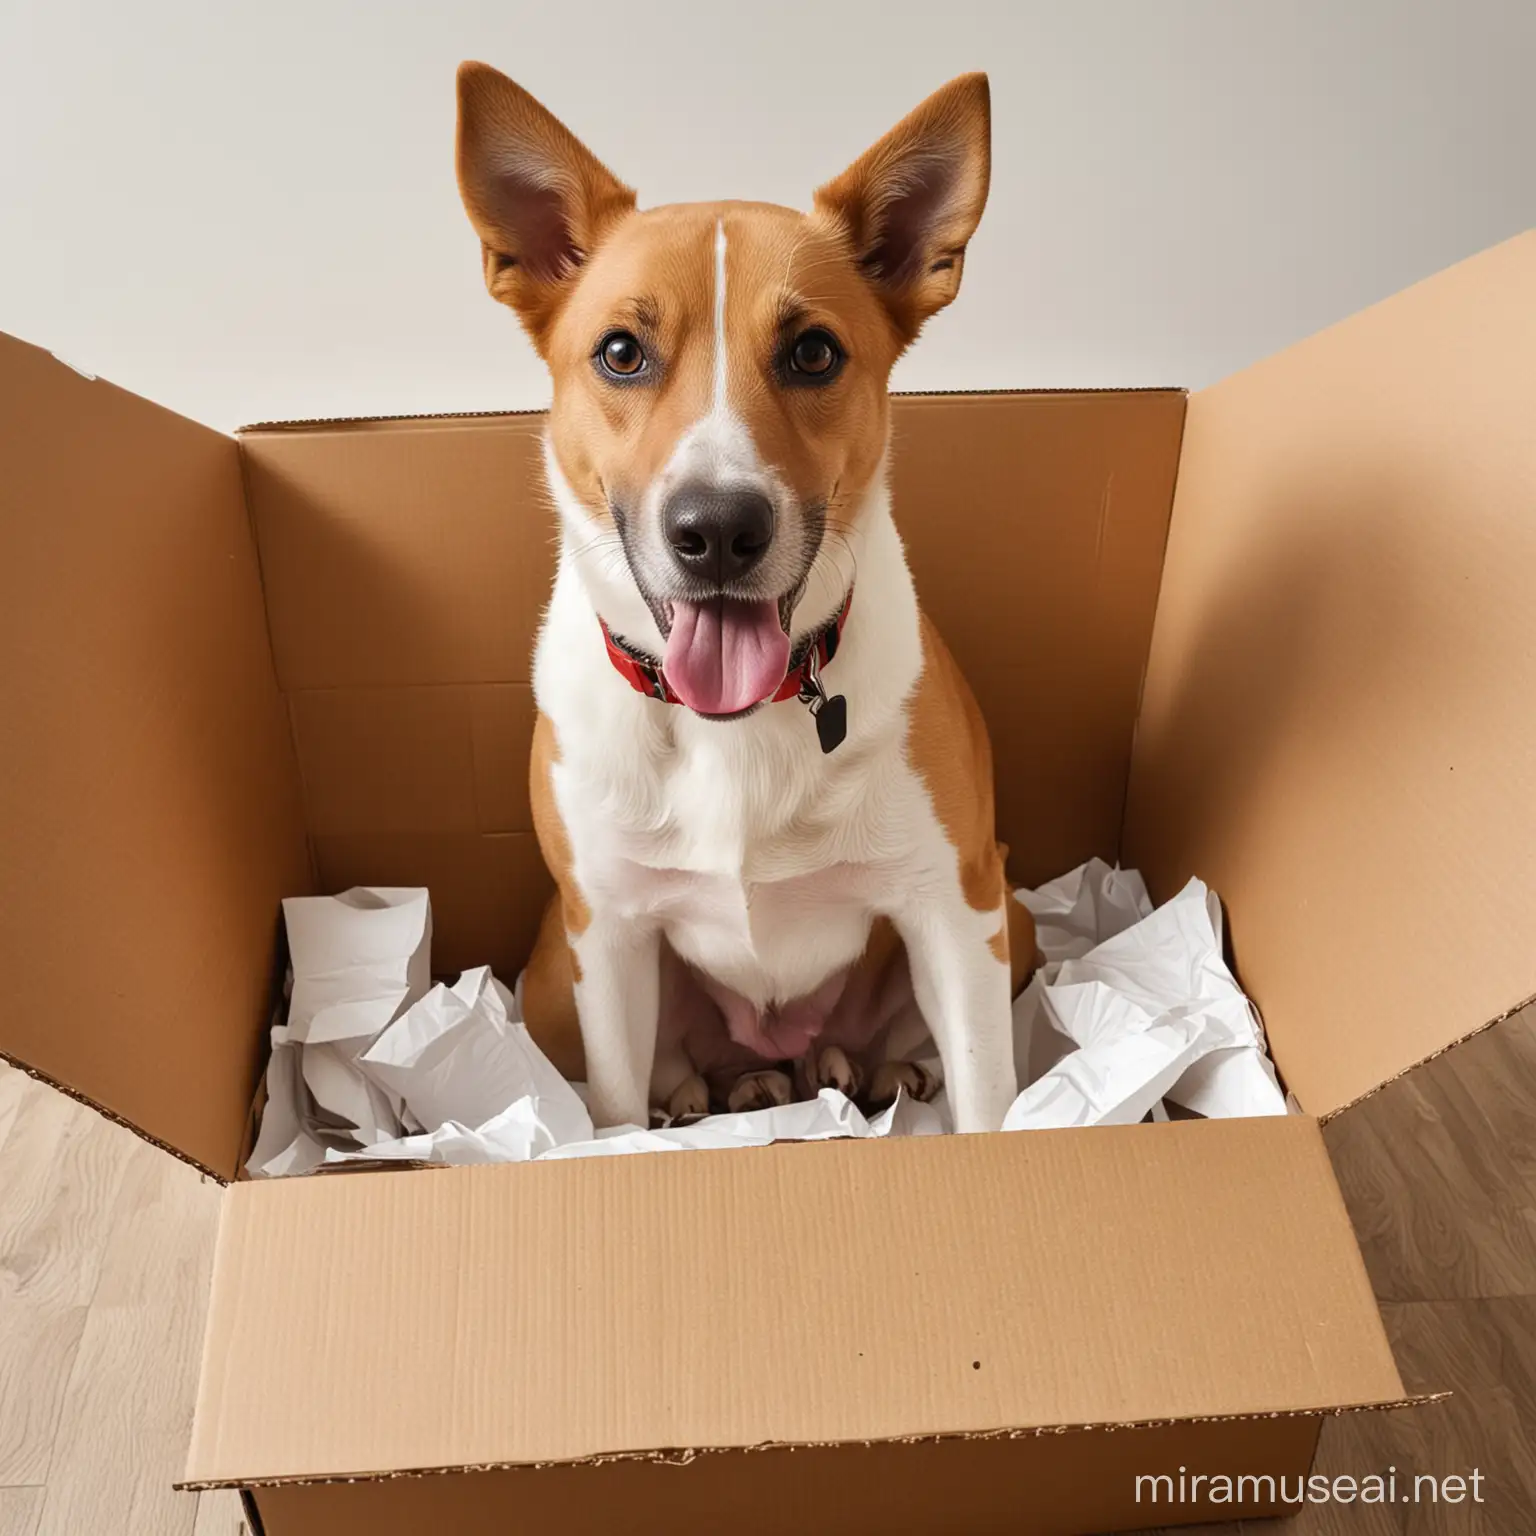 dog ripping open cardboard box
